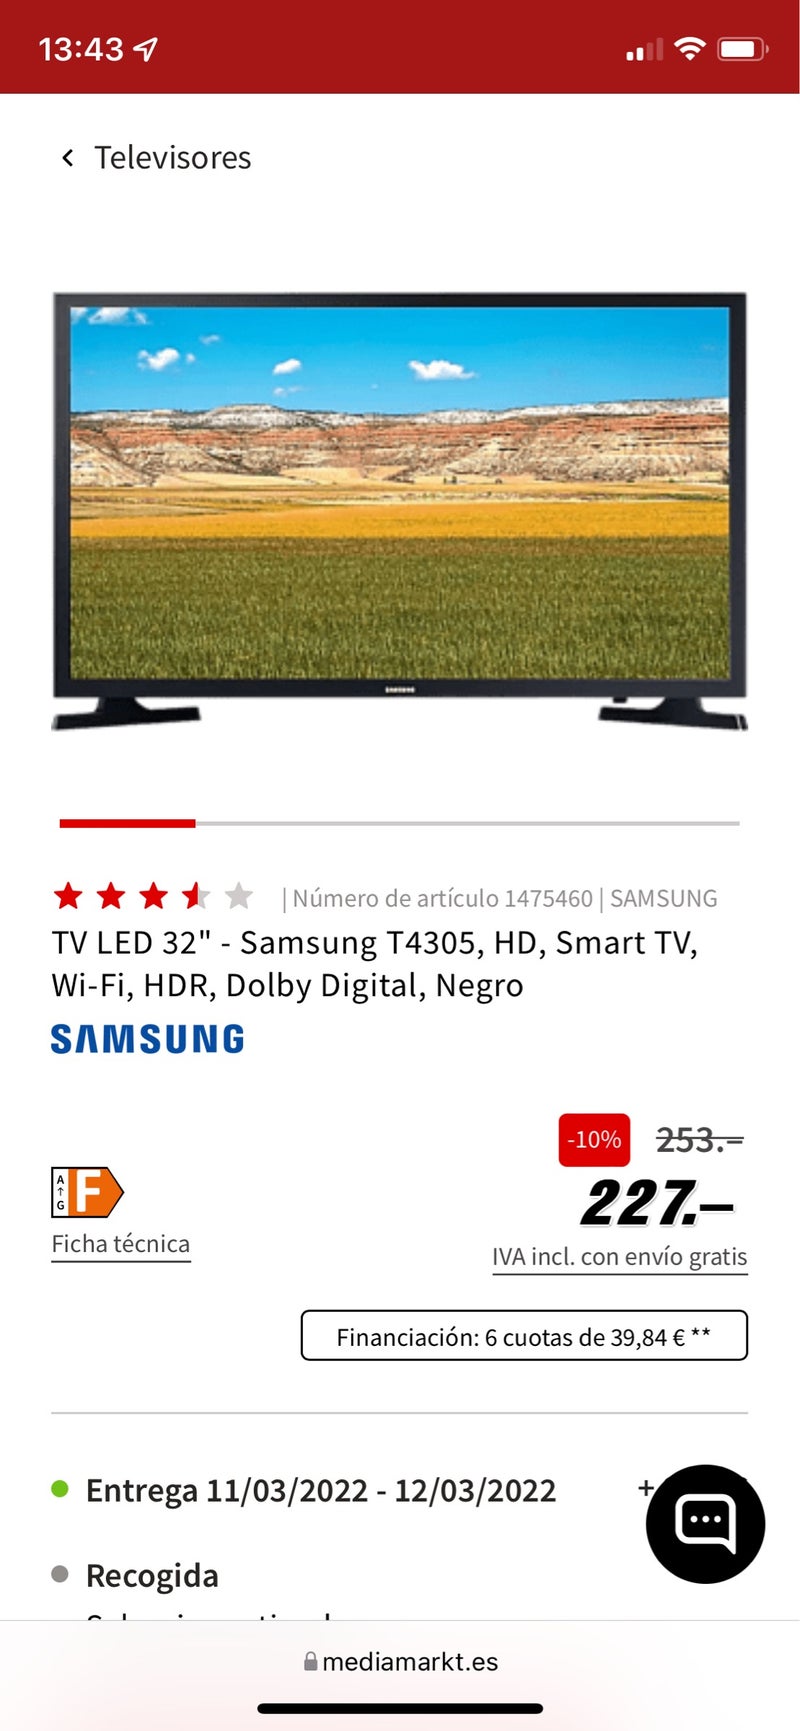 Samsung smart tv 32